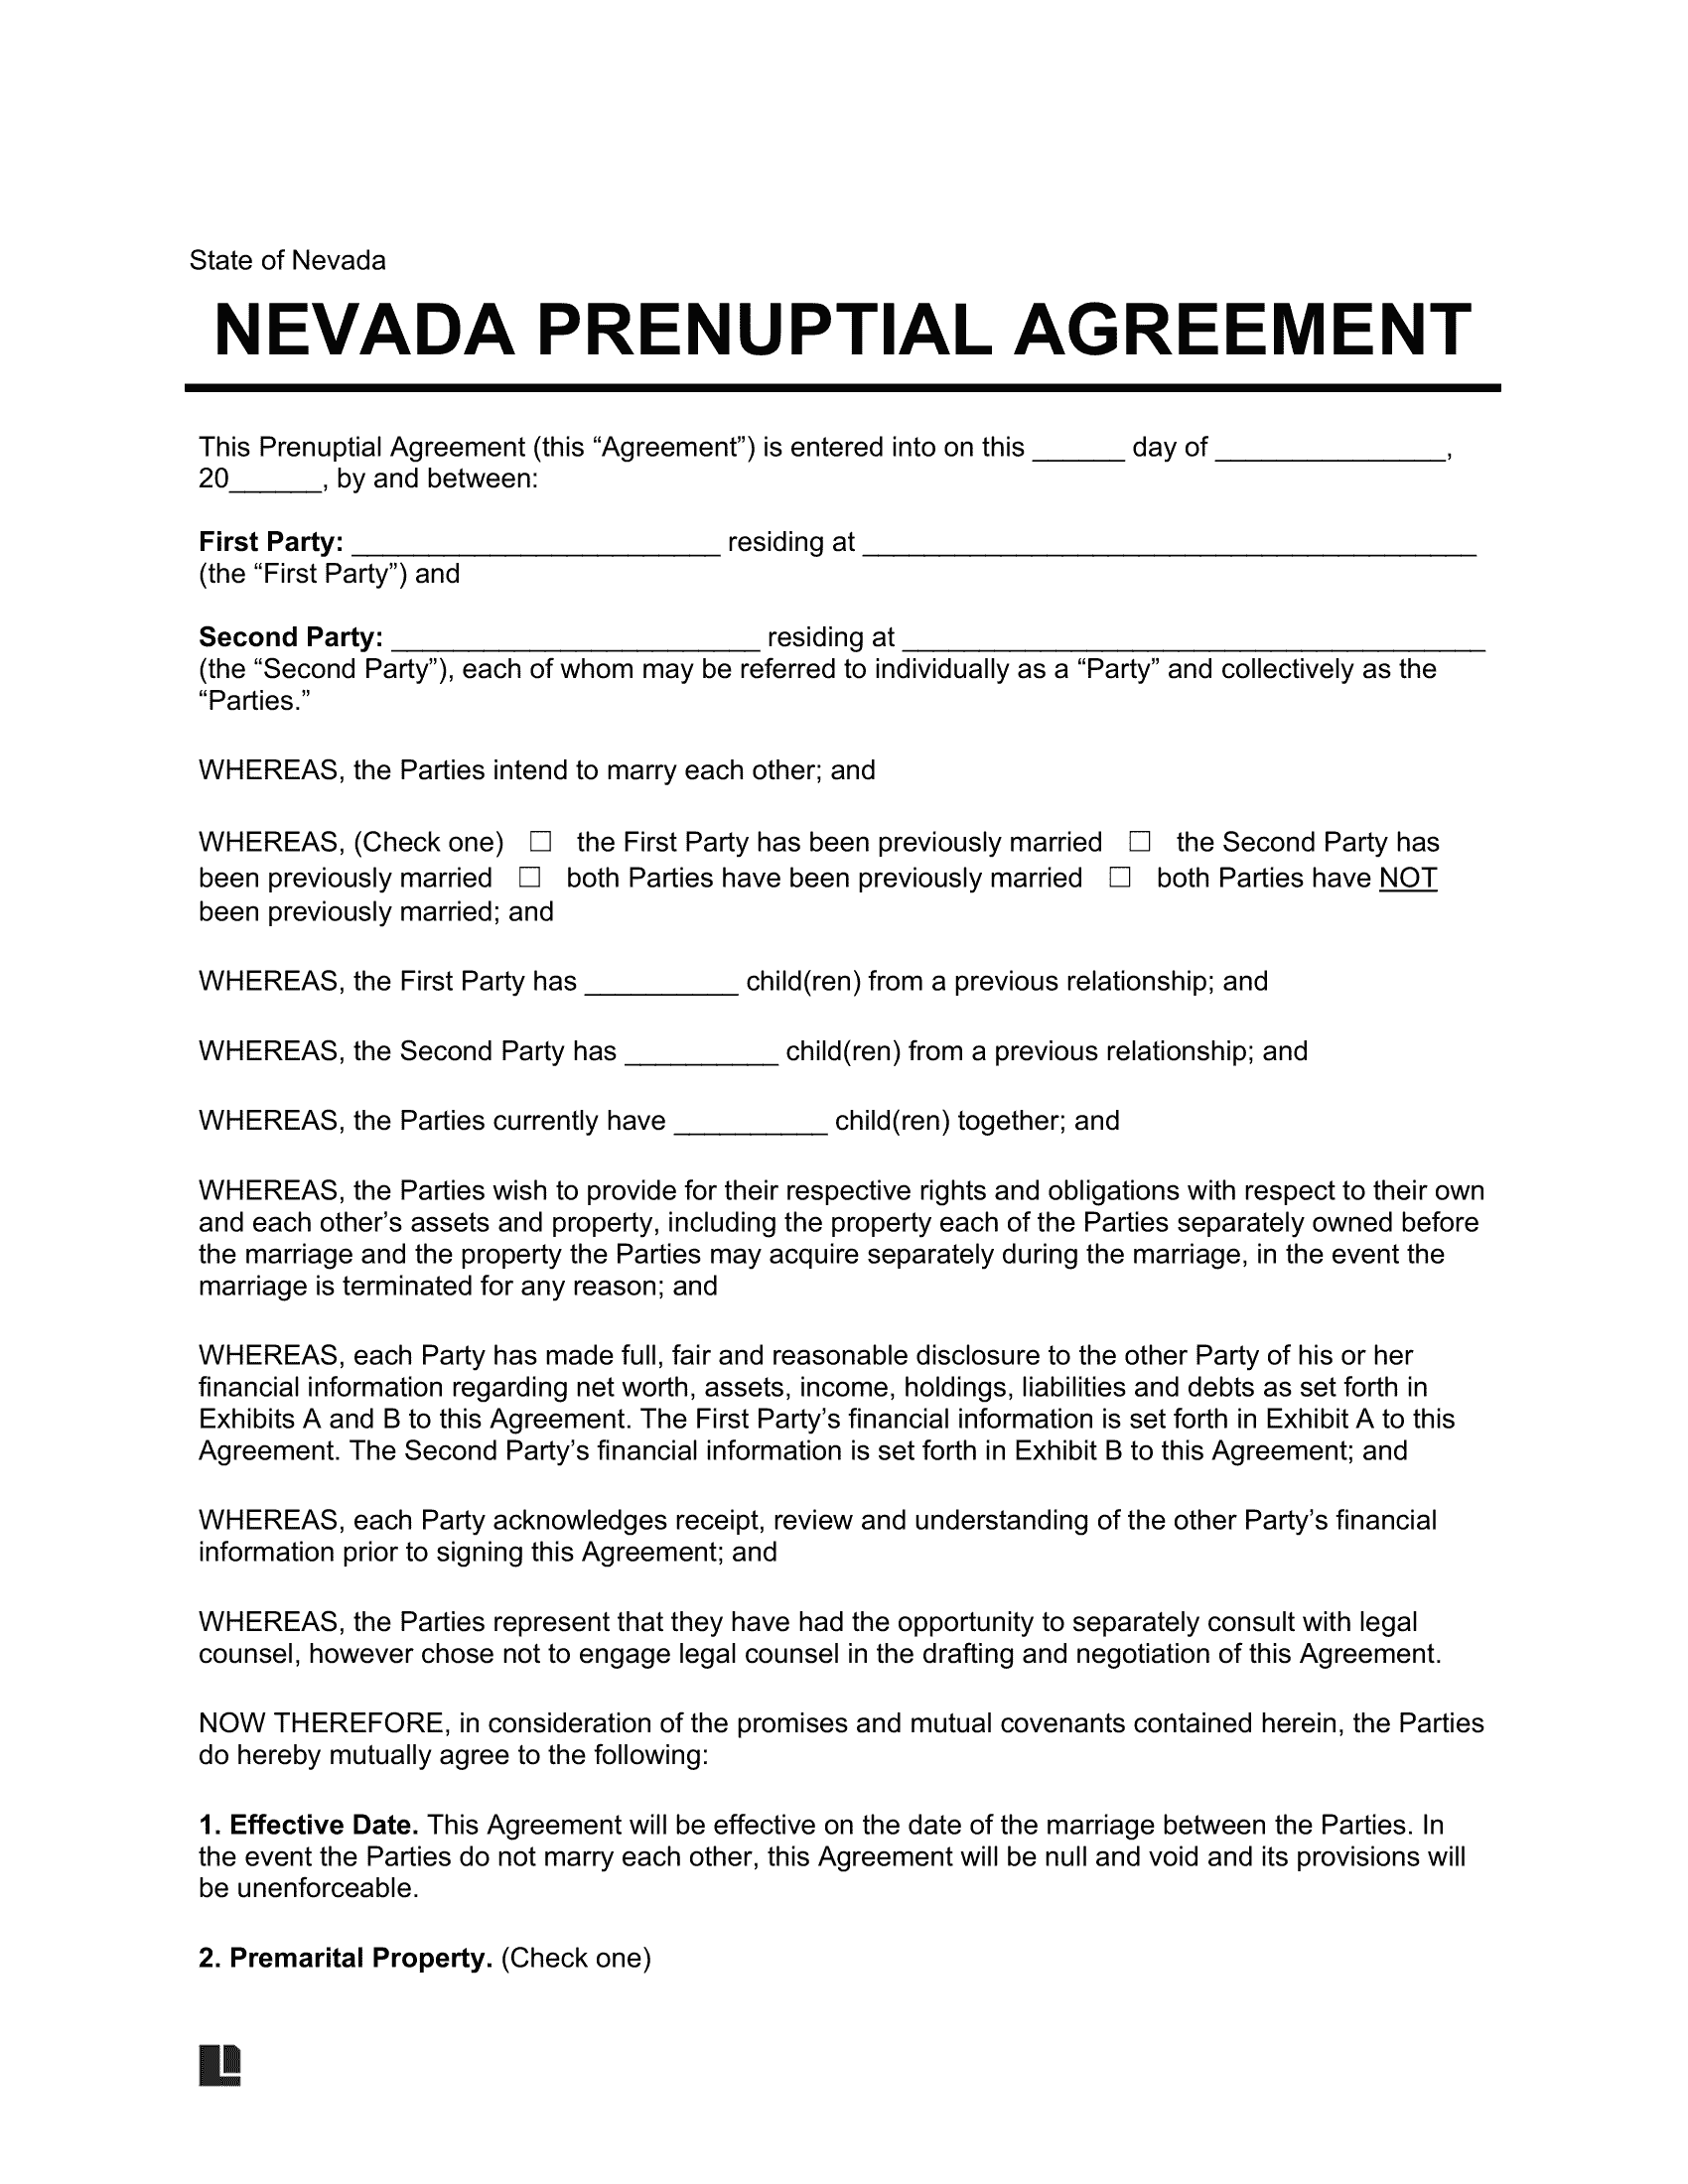 Nevada Prenuptial Agreement Template